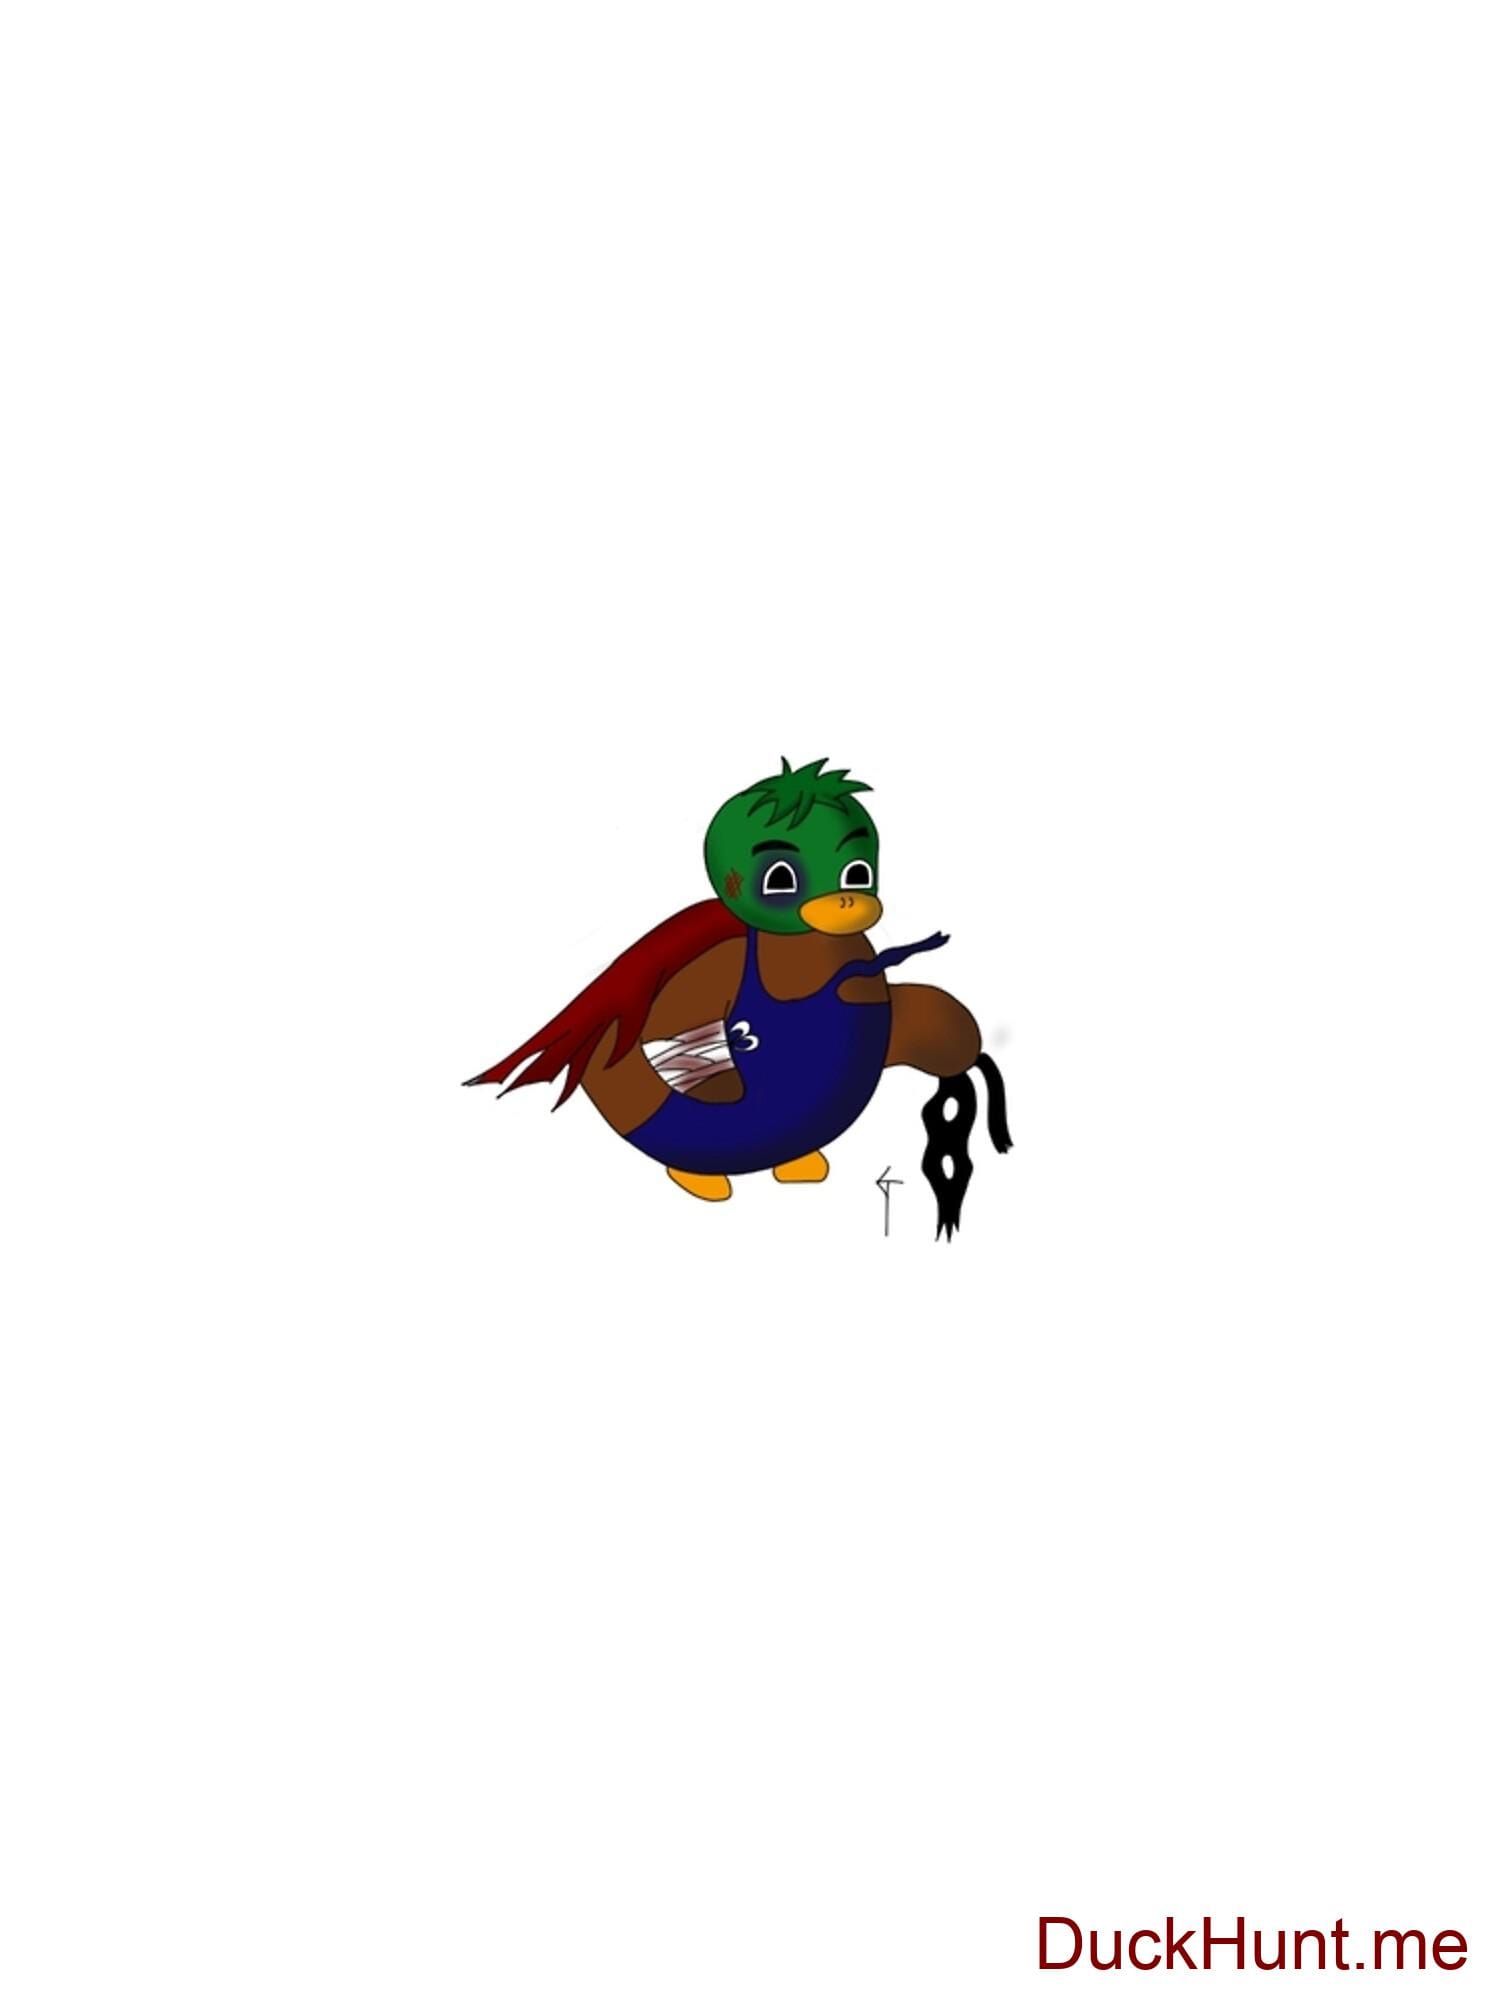 Dead DuckHunt Boss (smokeless) Black Chiffon Top alternative image 2